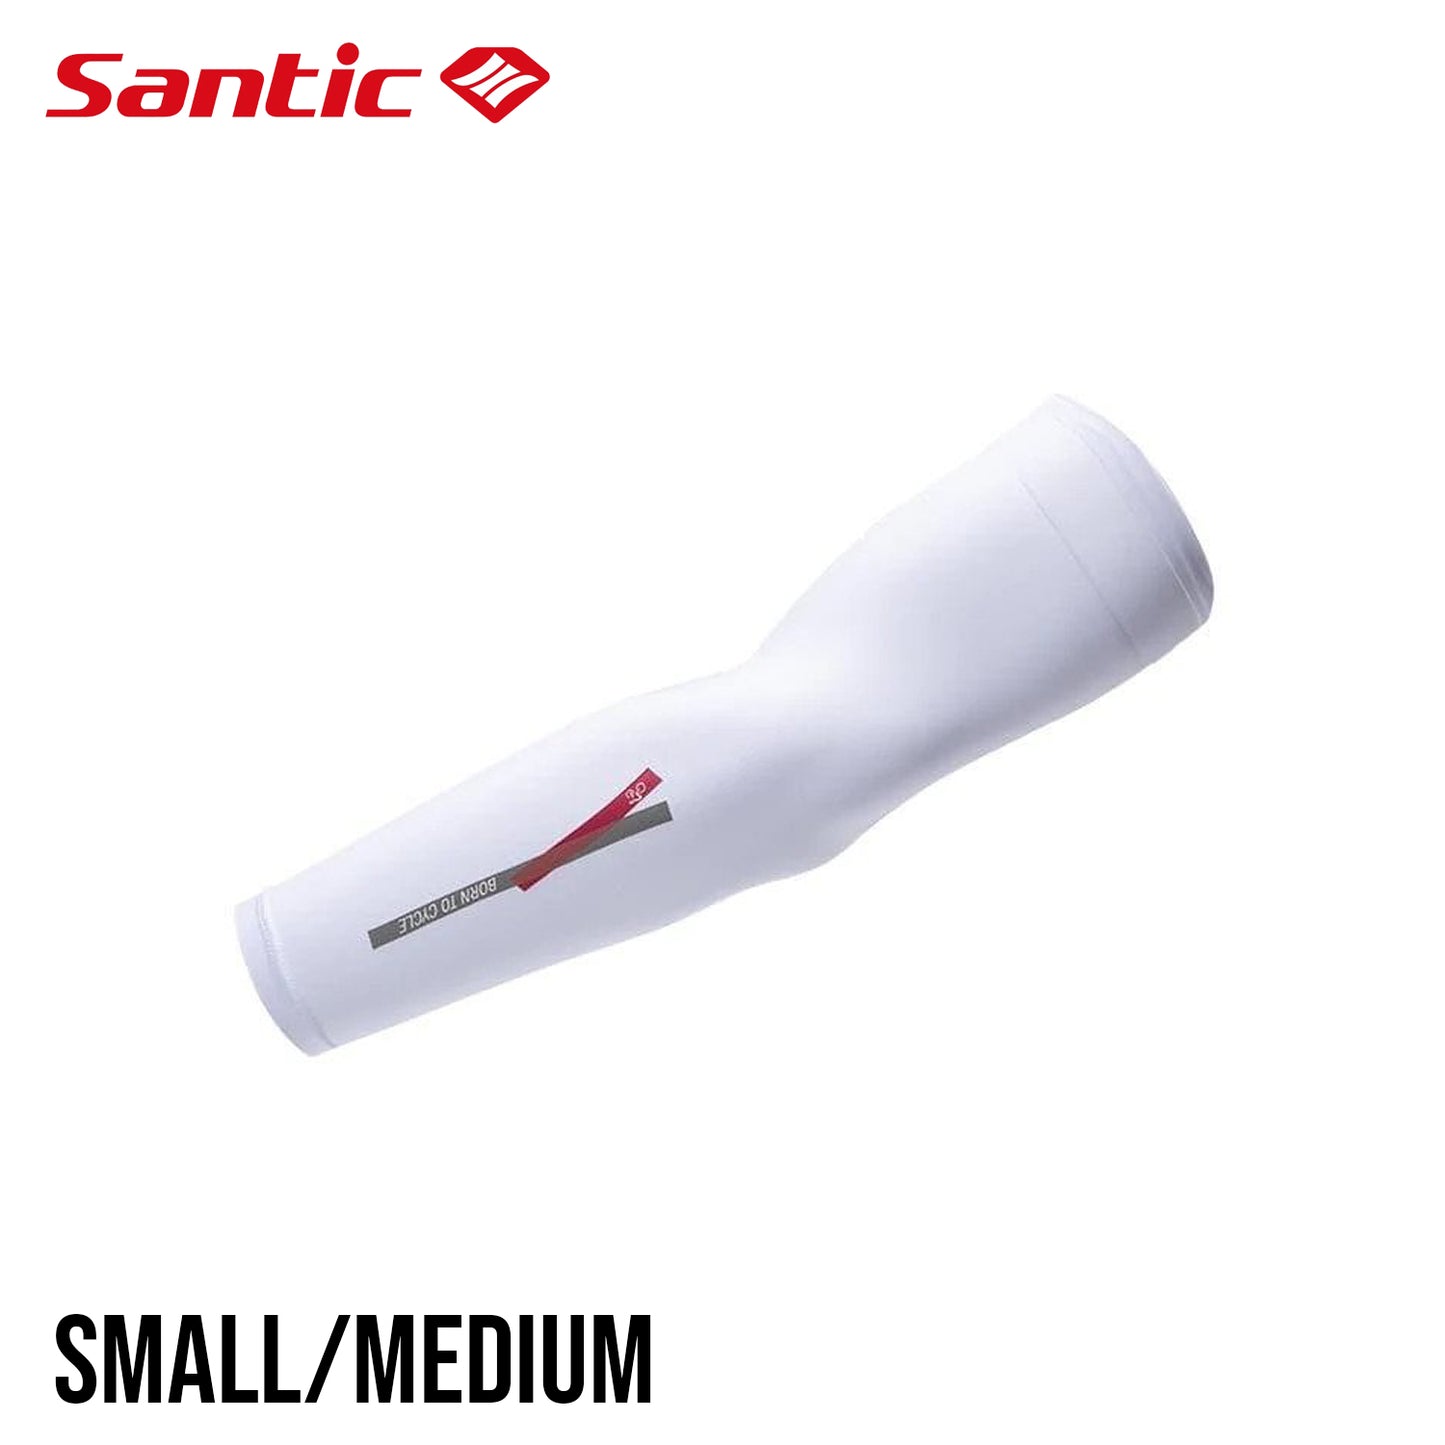 Santic Canty UPF 50+ Light Arm Sleeves - White